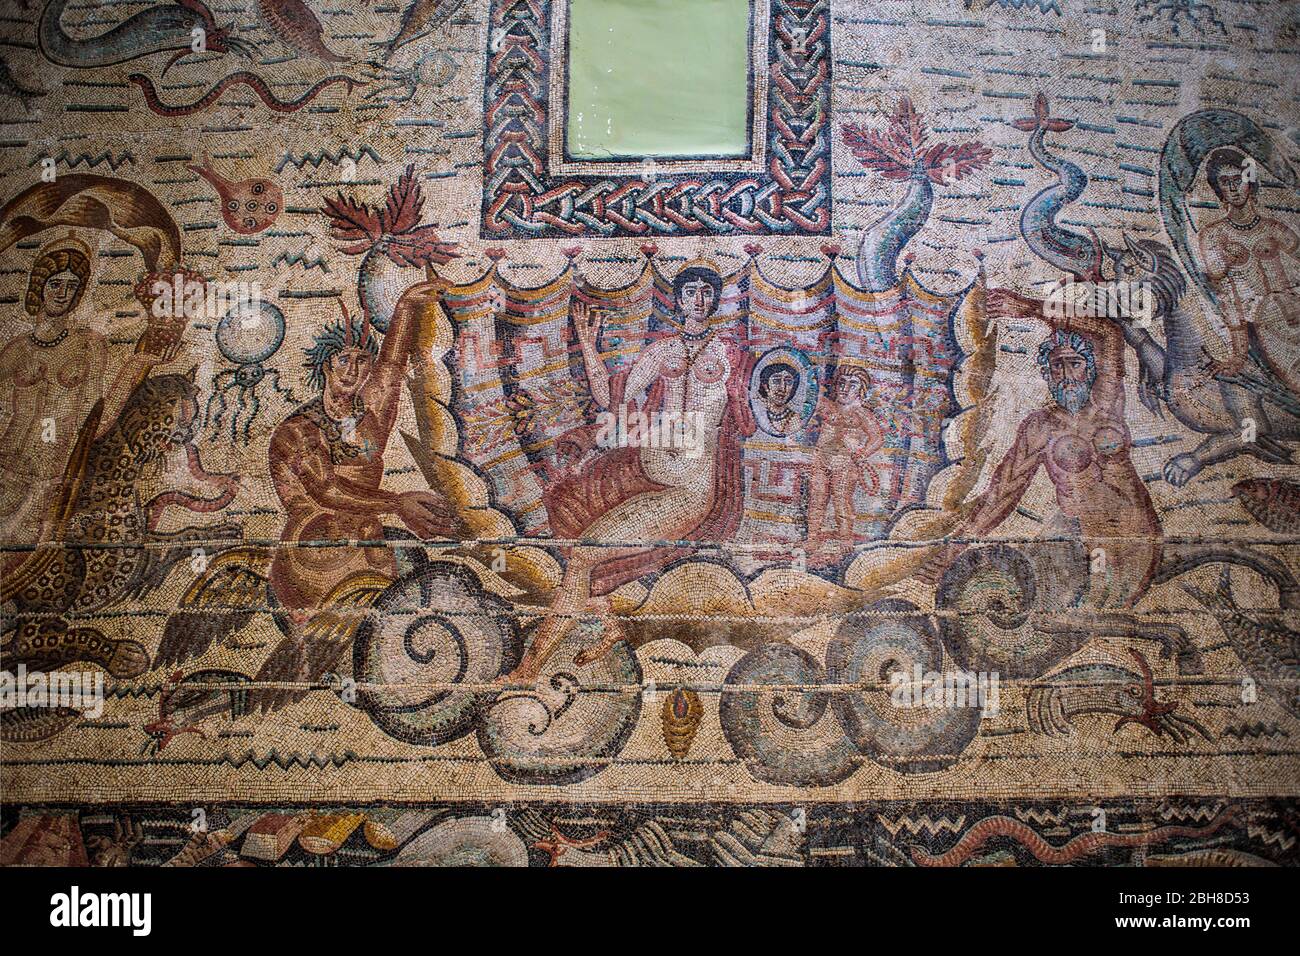 Argelia, Djemila City, römische Ruinen von Djemila City, UNESCO, W. H. Djemilla Archäologisches Museum, Römische Mosaiken Stockfoto